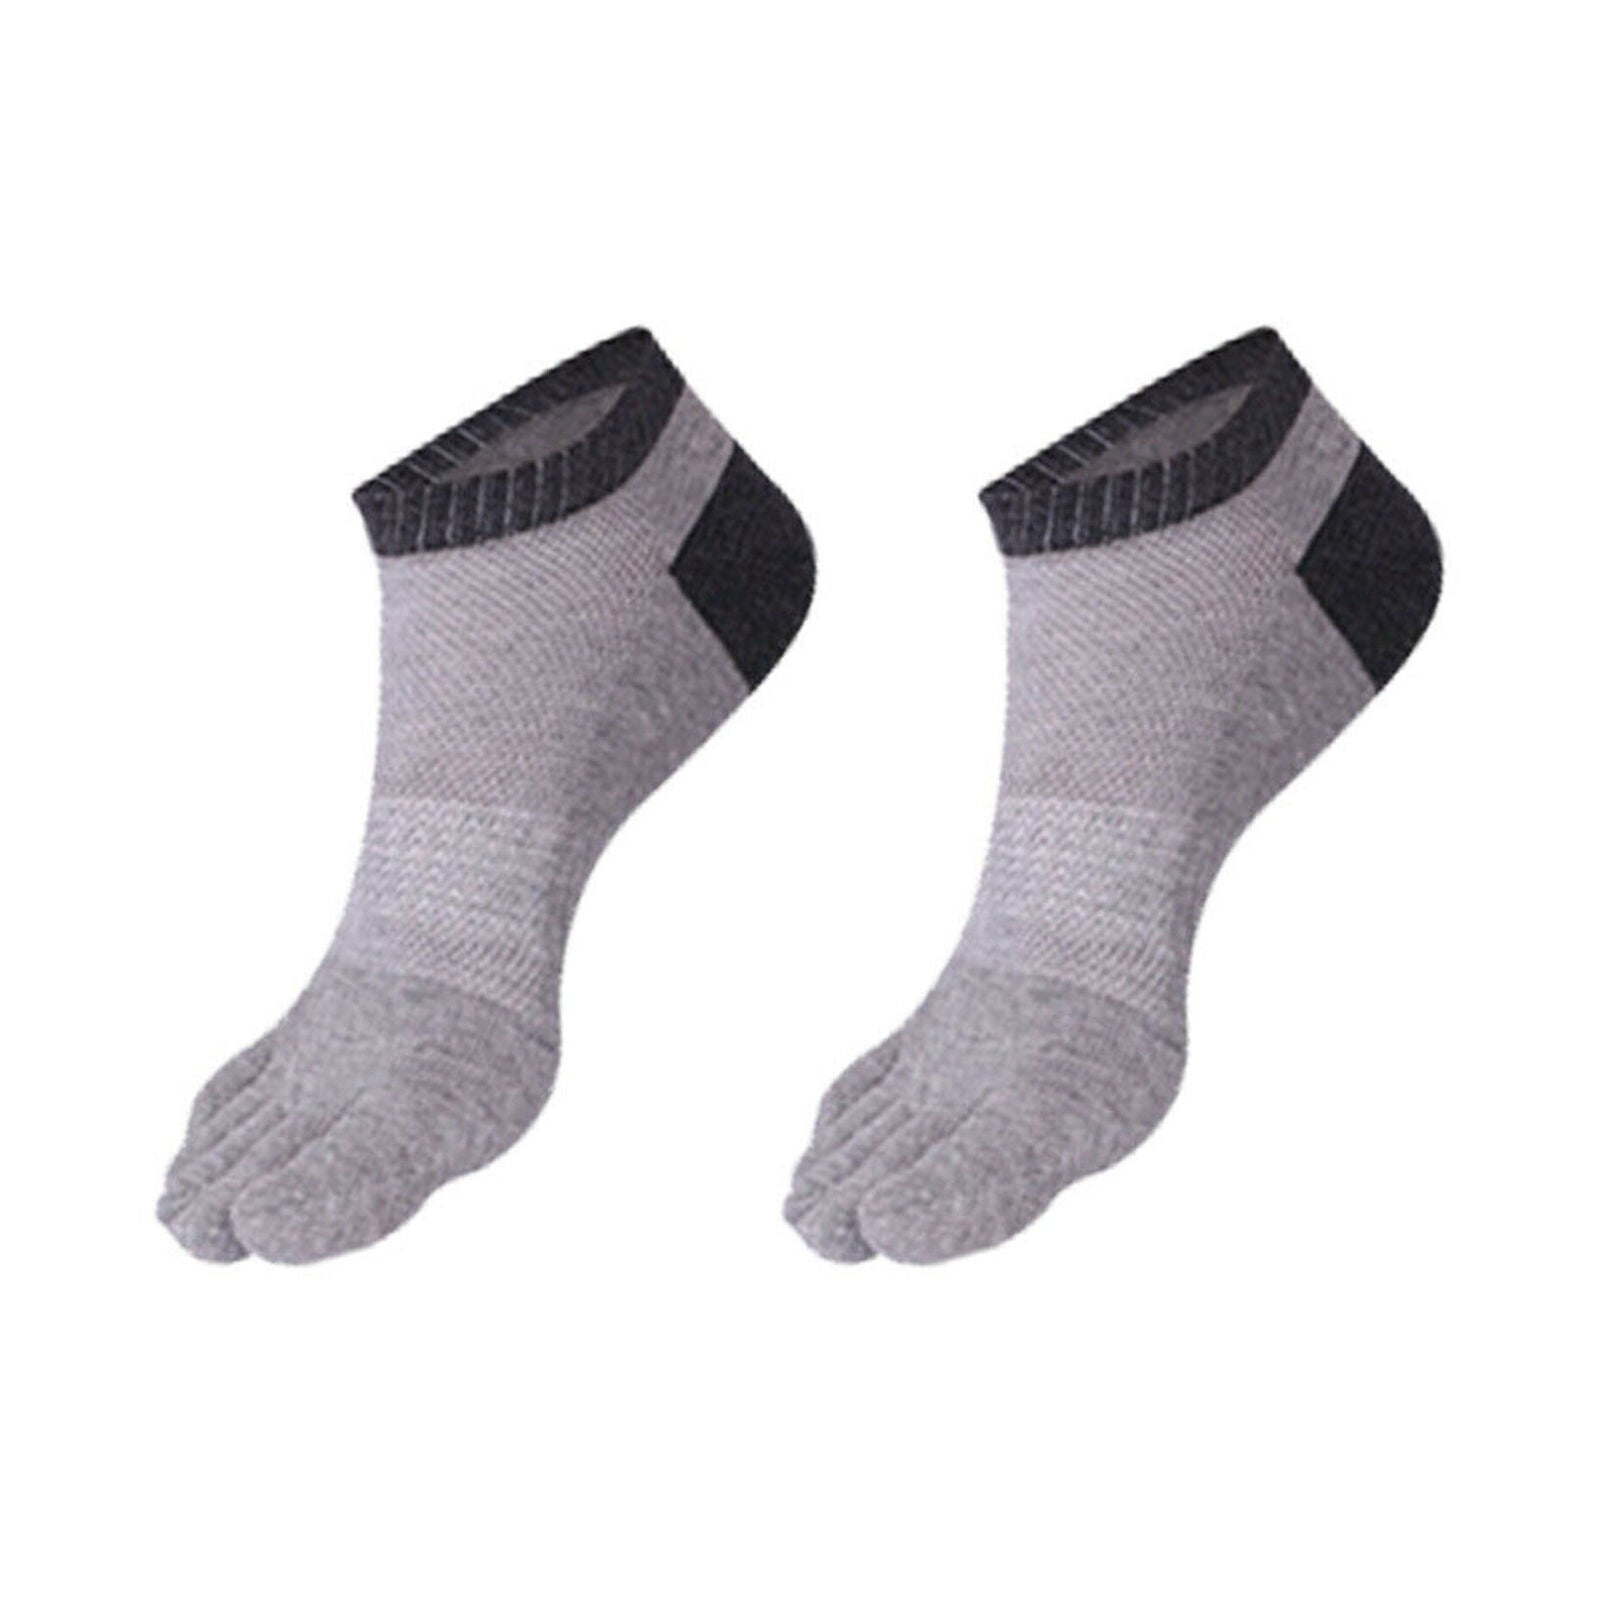 5 Pack Men Cotton Toe Five Finger Socks Low Cut Ankle Casual Sport Breathe